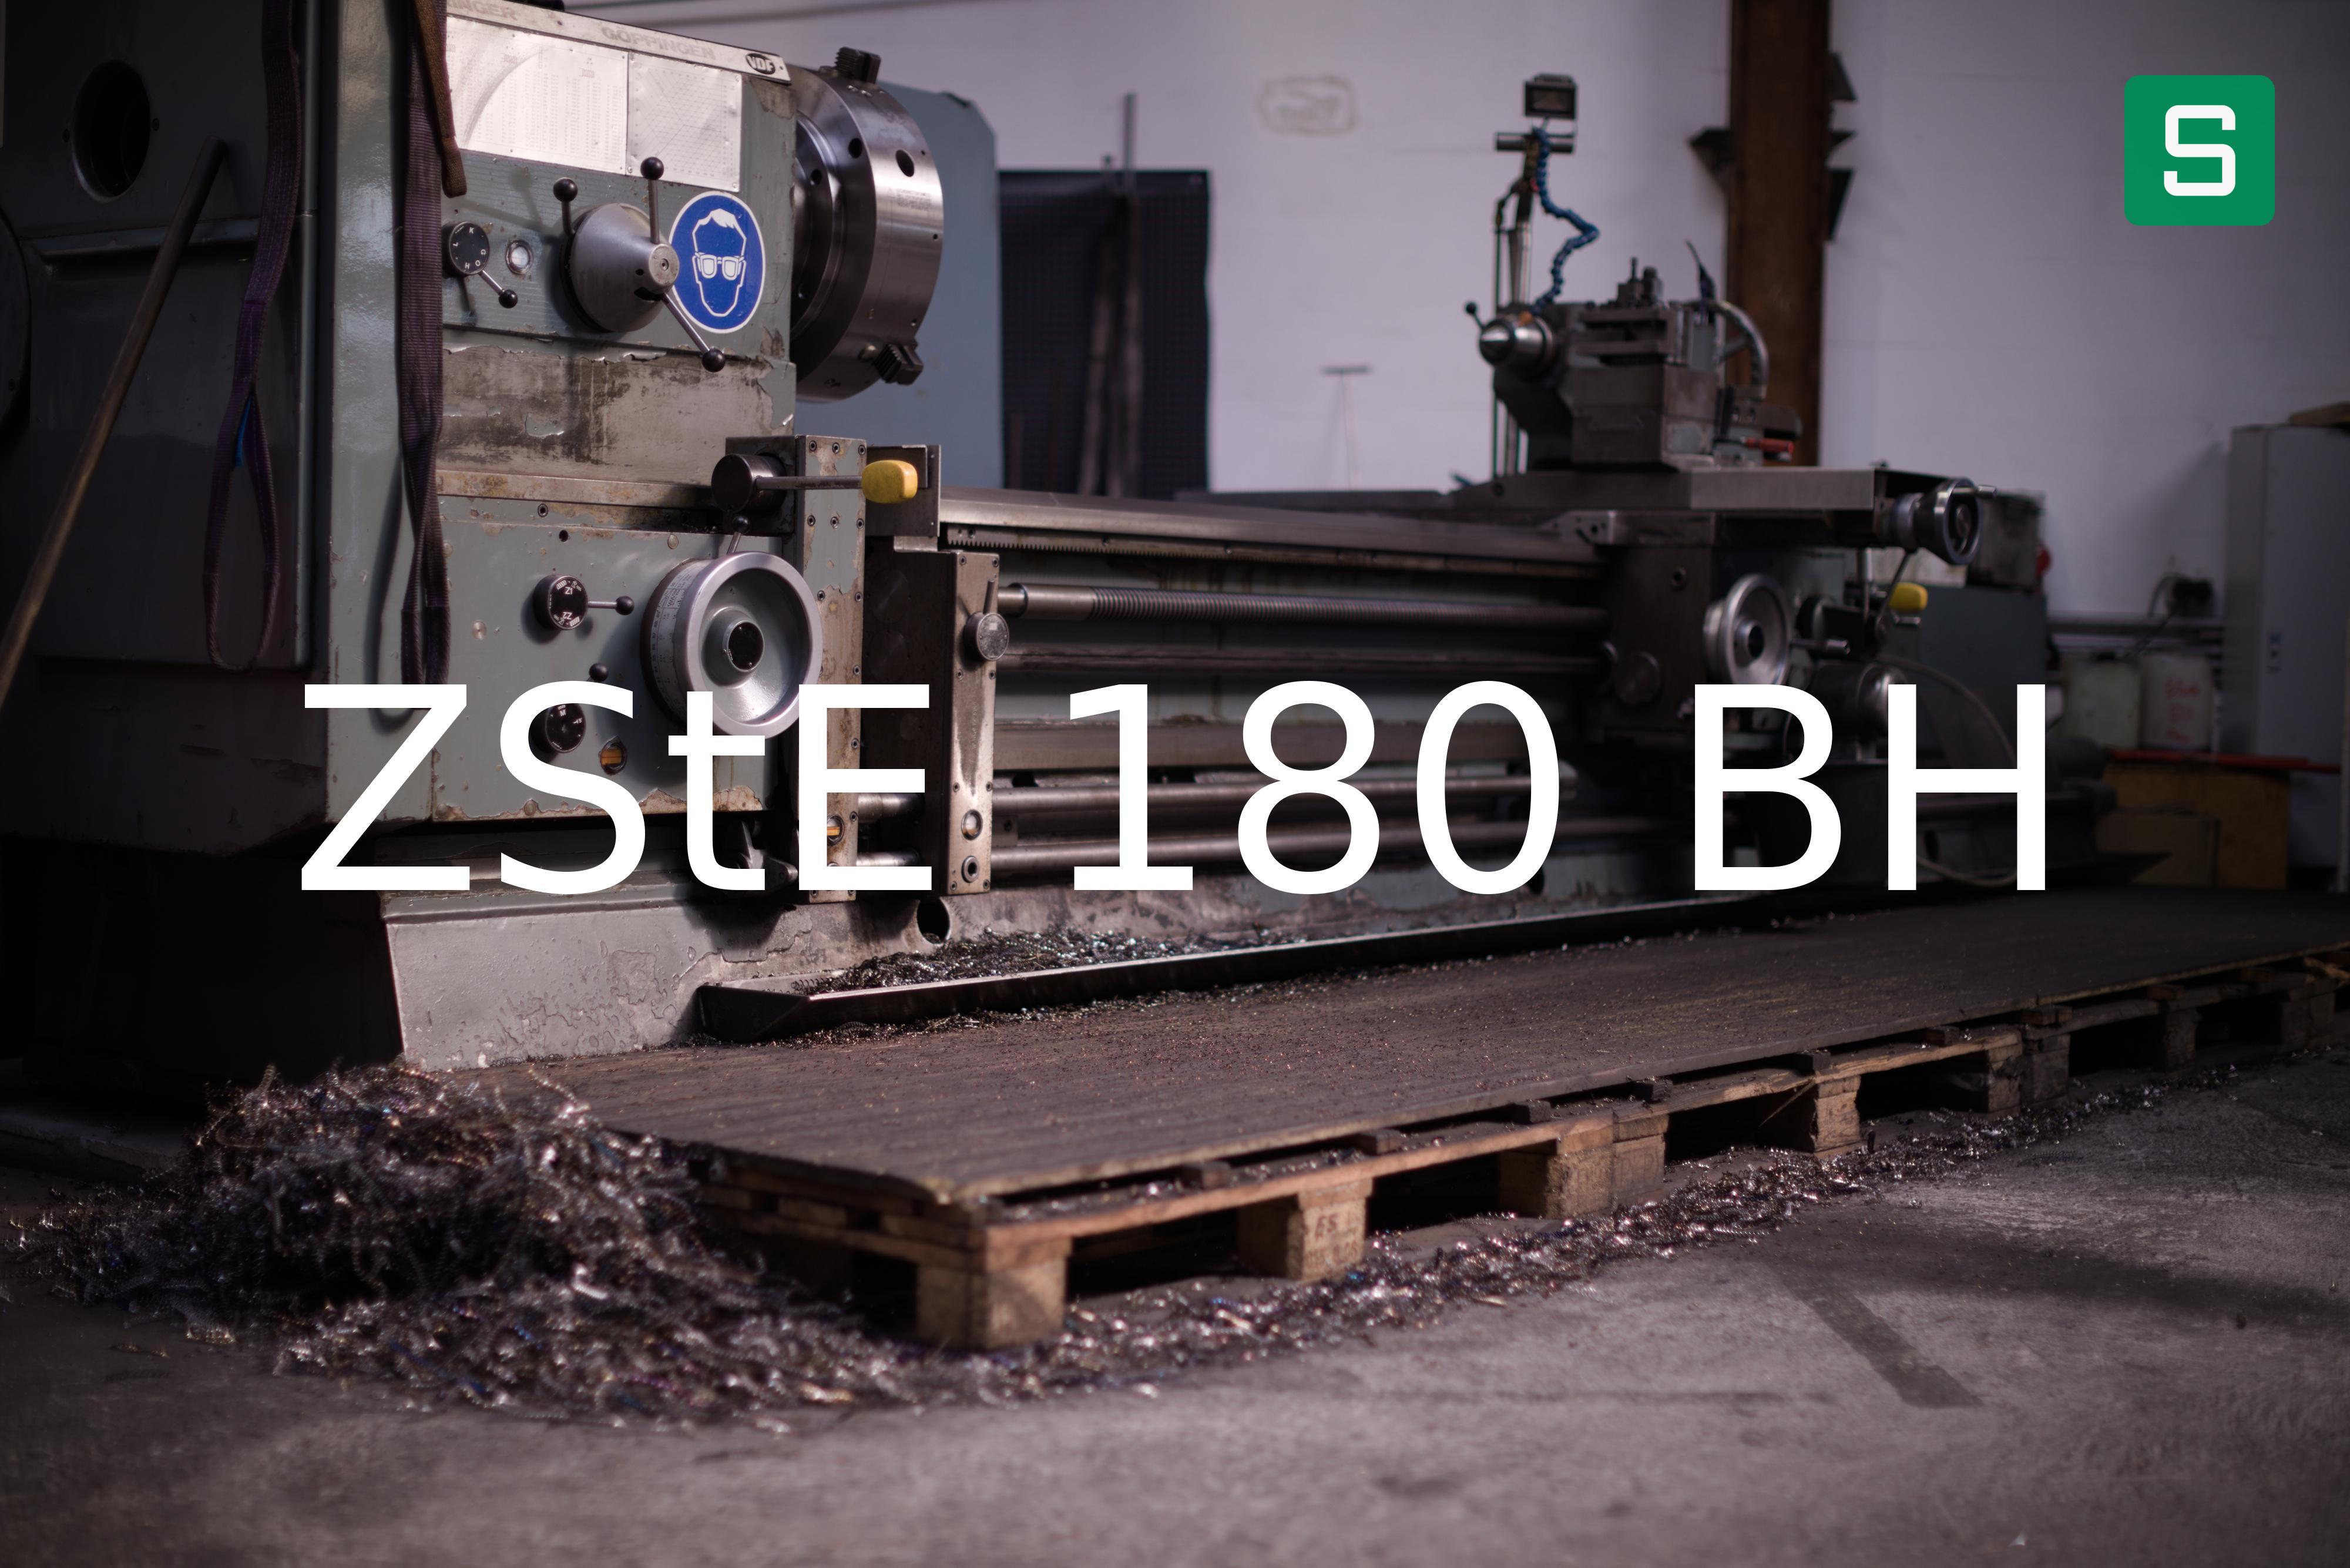 Steel Material: ZStE 180 BH